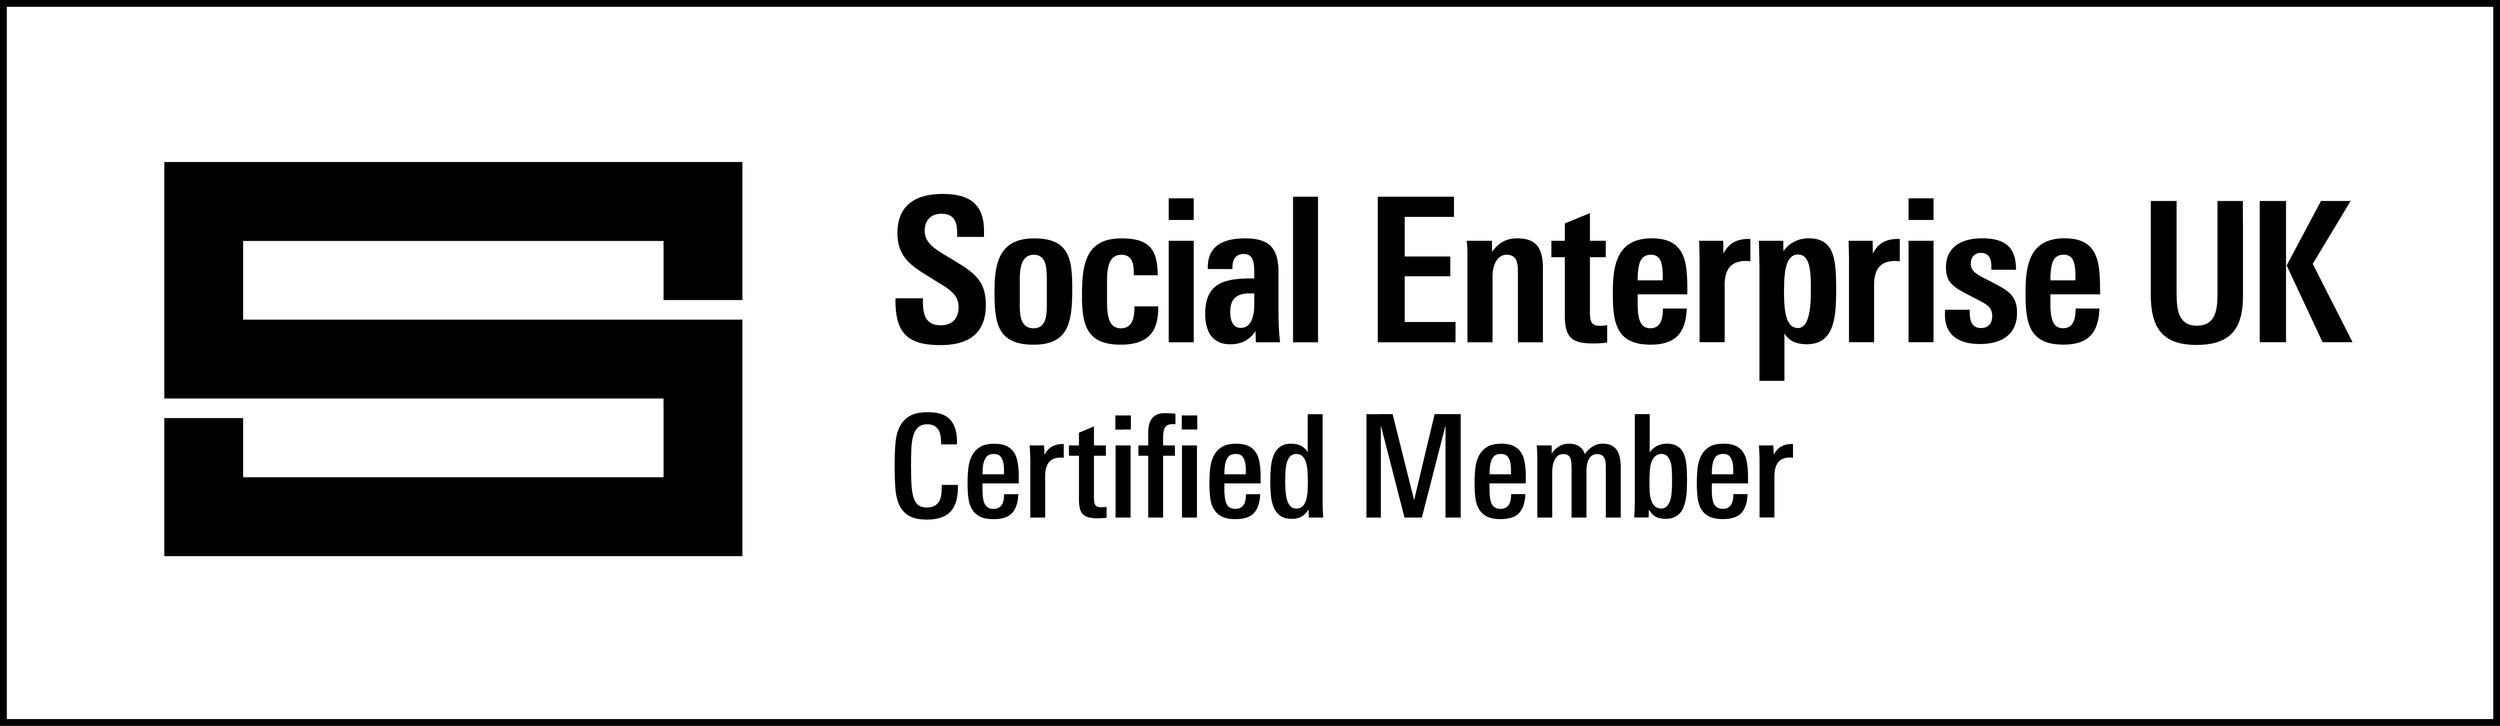 Certified Social Enterprise Badge - Black.jpg